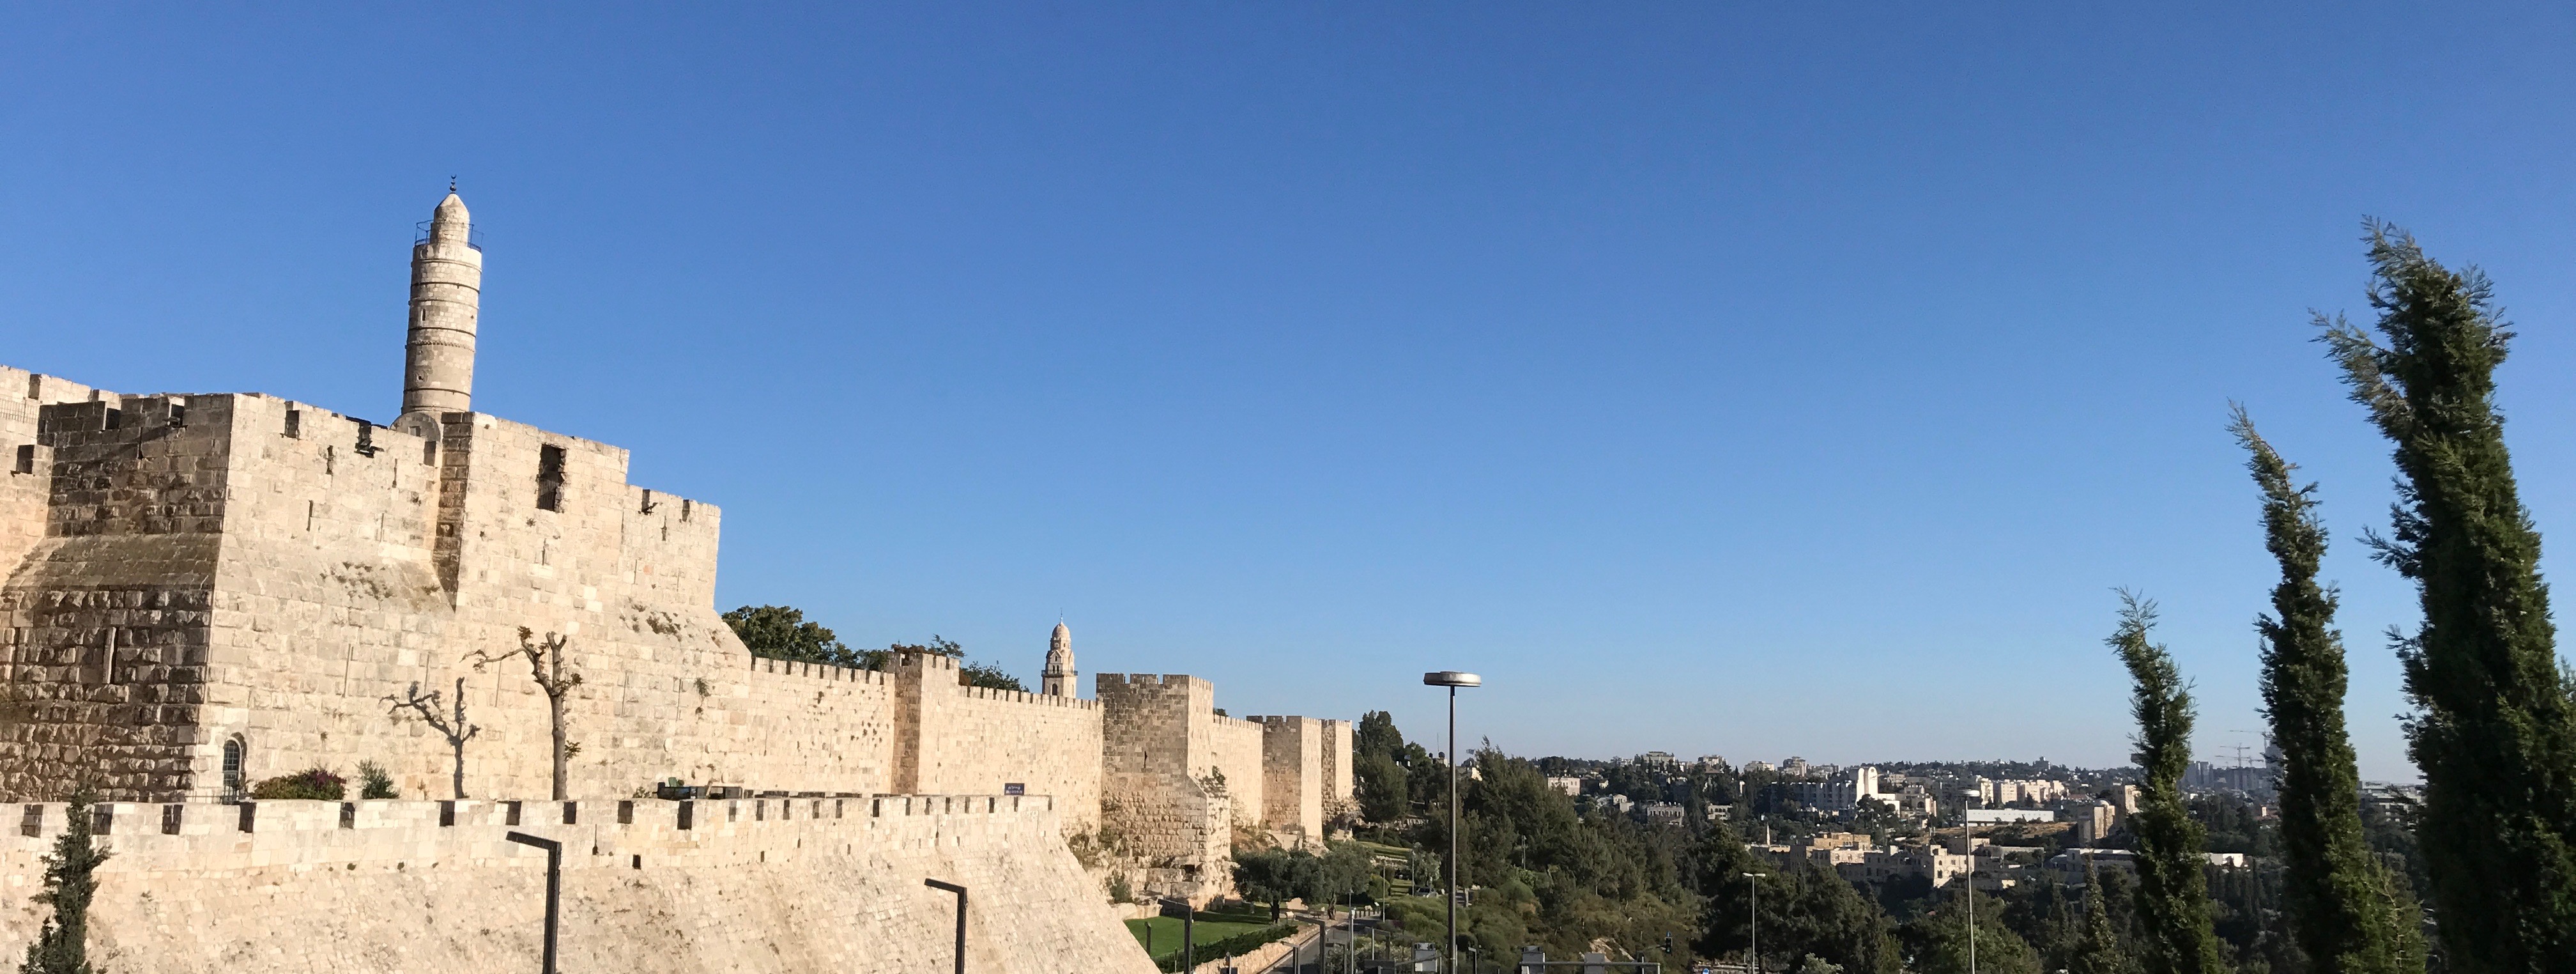 The Old City Walls of Jerusalem